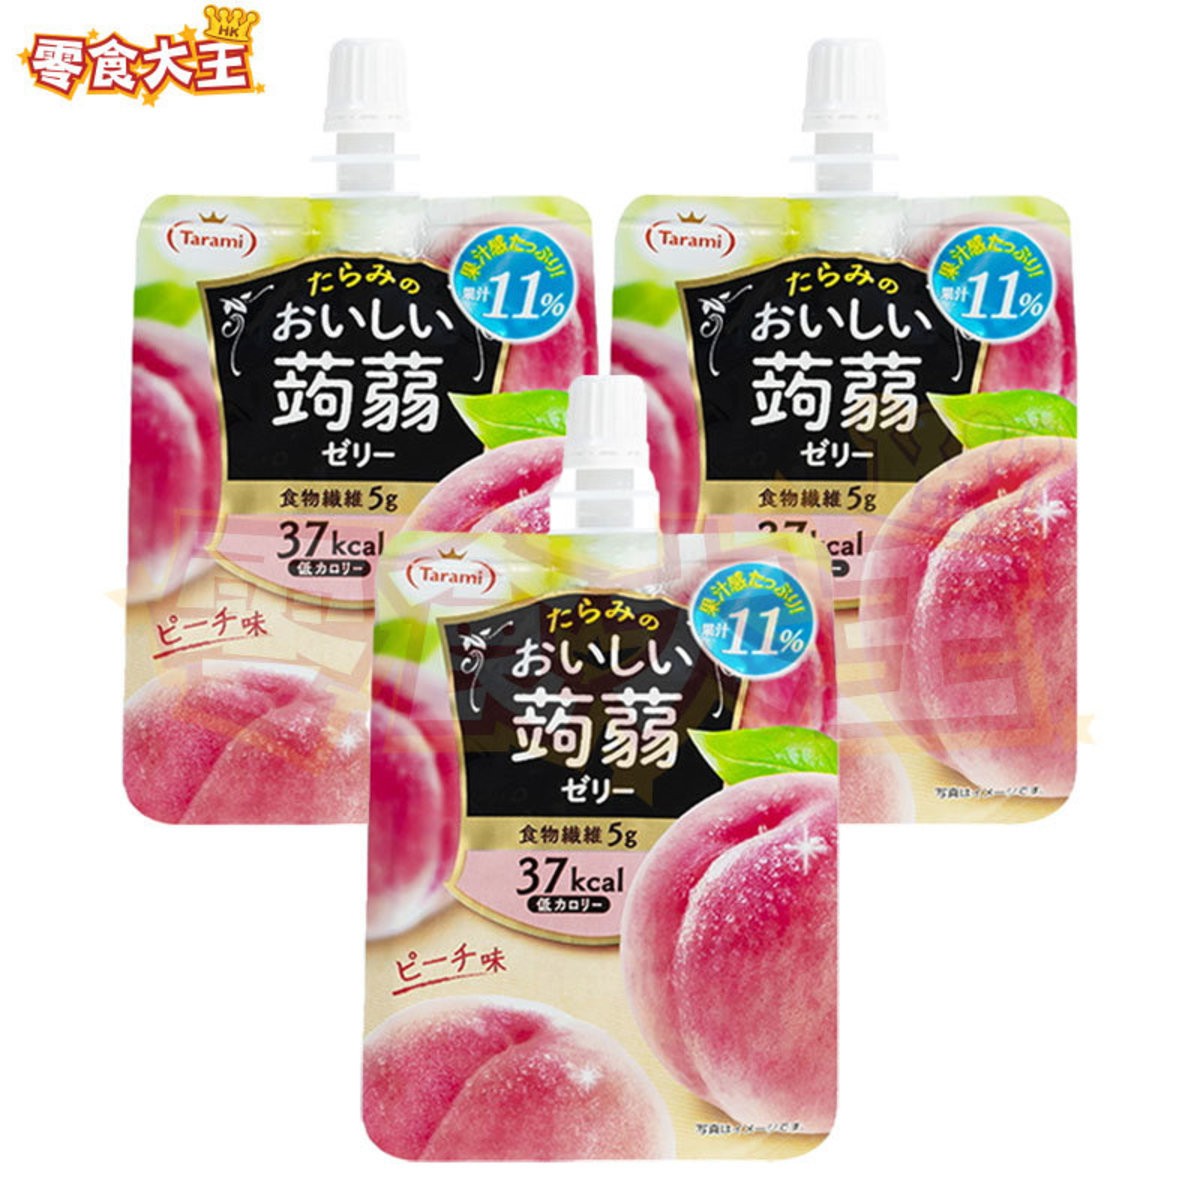 Tarami Low Calorie Konjac Jelly Drink Peach Flavor 150g X 3 Bags 3 Hktvmall Online Shopping